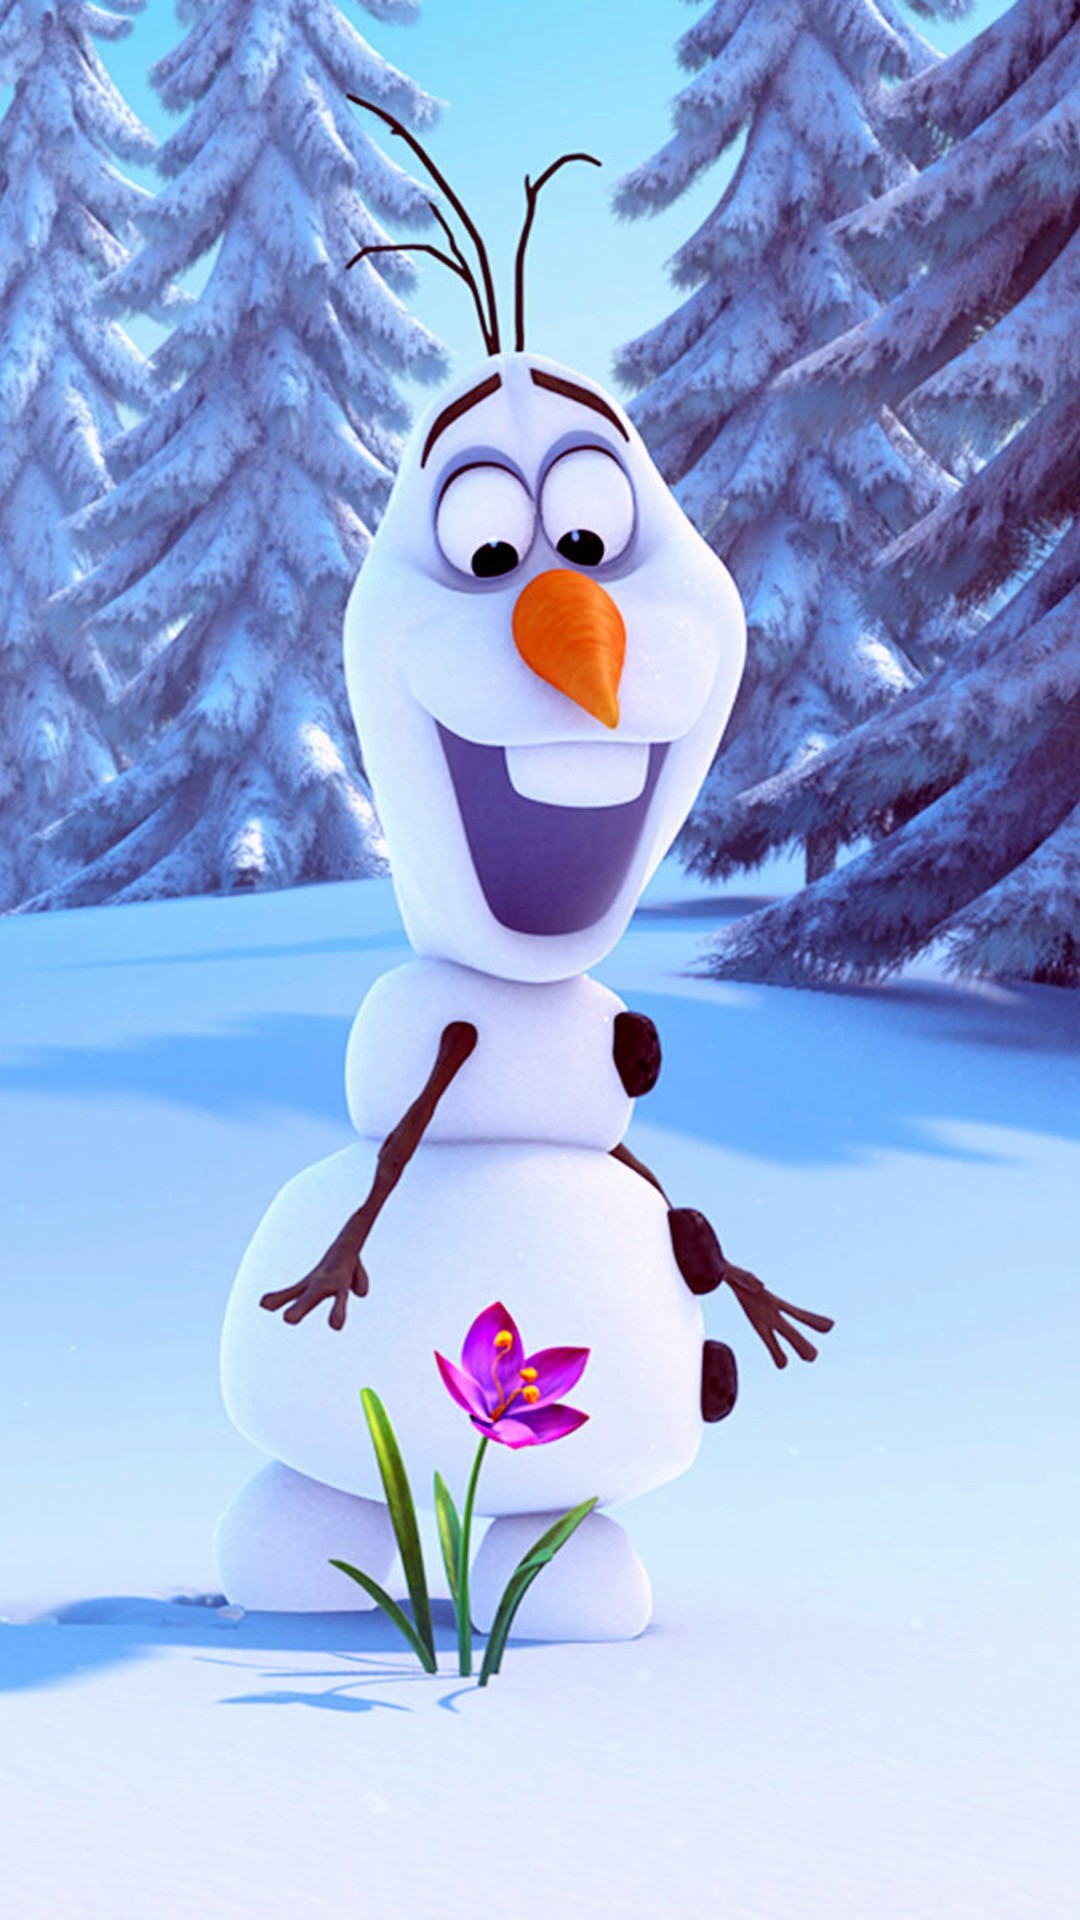 1080x1920 Olaf Frozen iPhone 6 plus wallpaper for 2014 Halloween - Flower, Snow  Trees, Wonderland